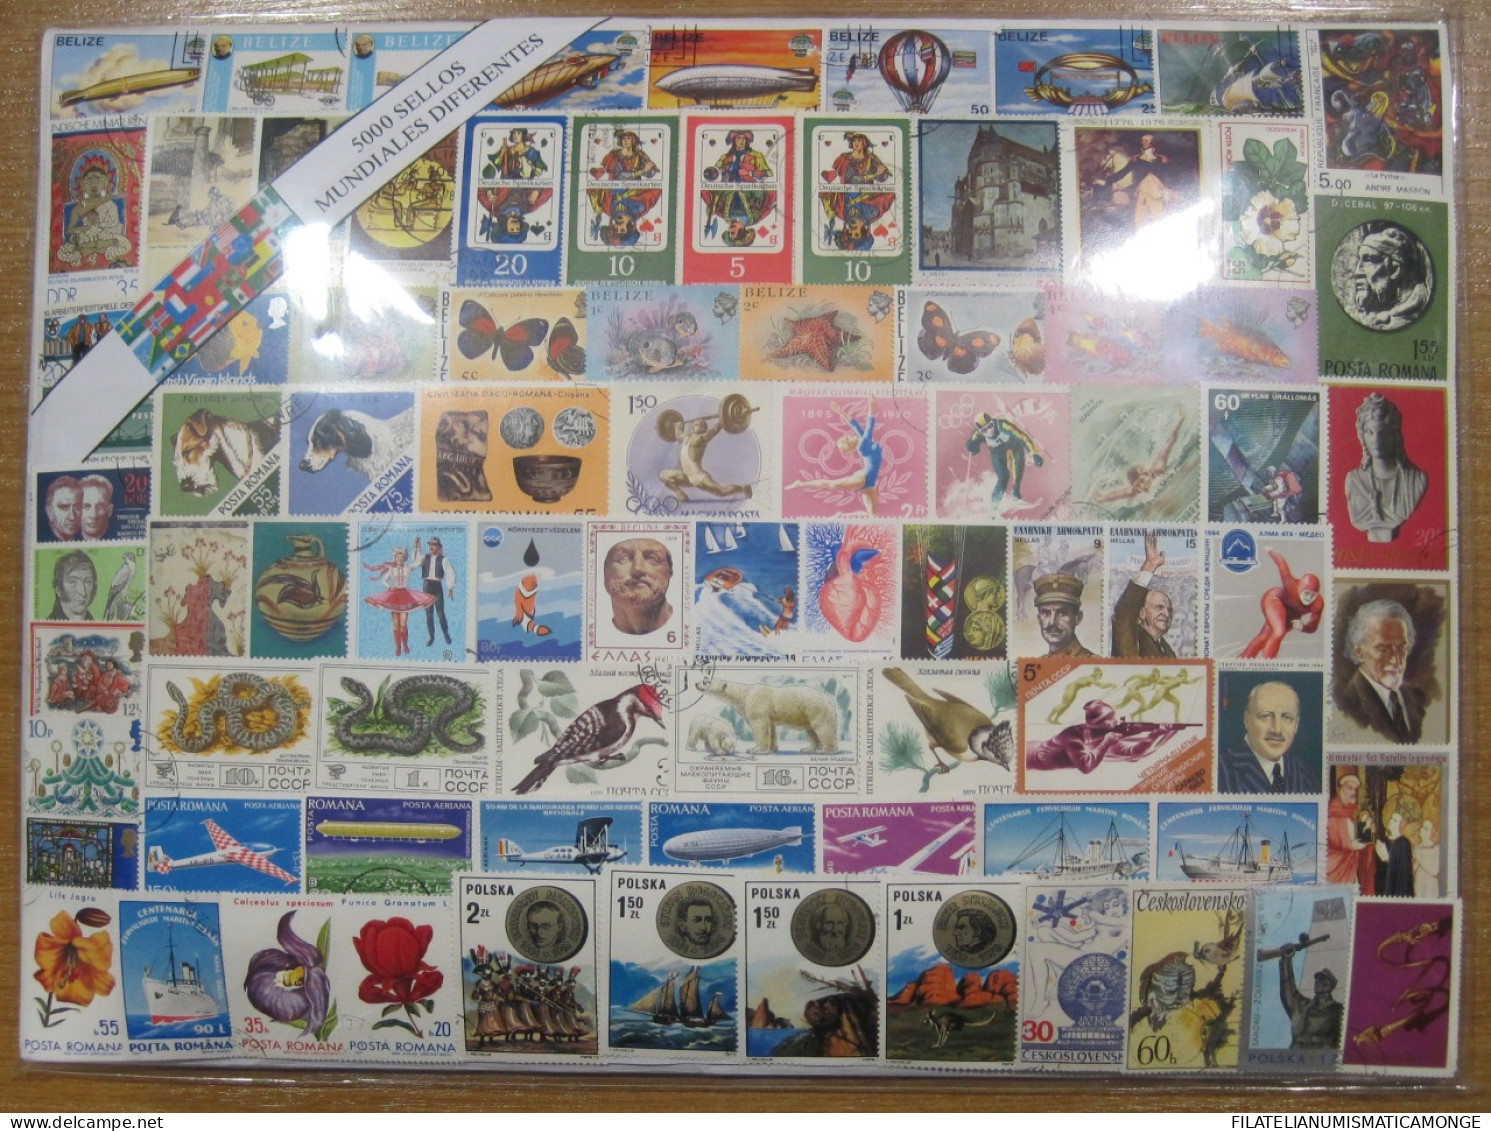  Offer - Lot Stamps - Paqueteria  Mundial 5000 Diferentes / Elegante Presentaci - Lots & Kiloware (mixtures) - Min. 1000 Stamps